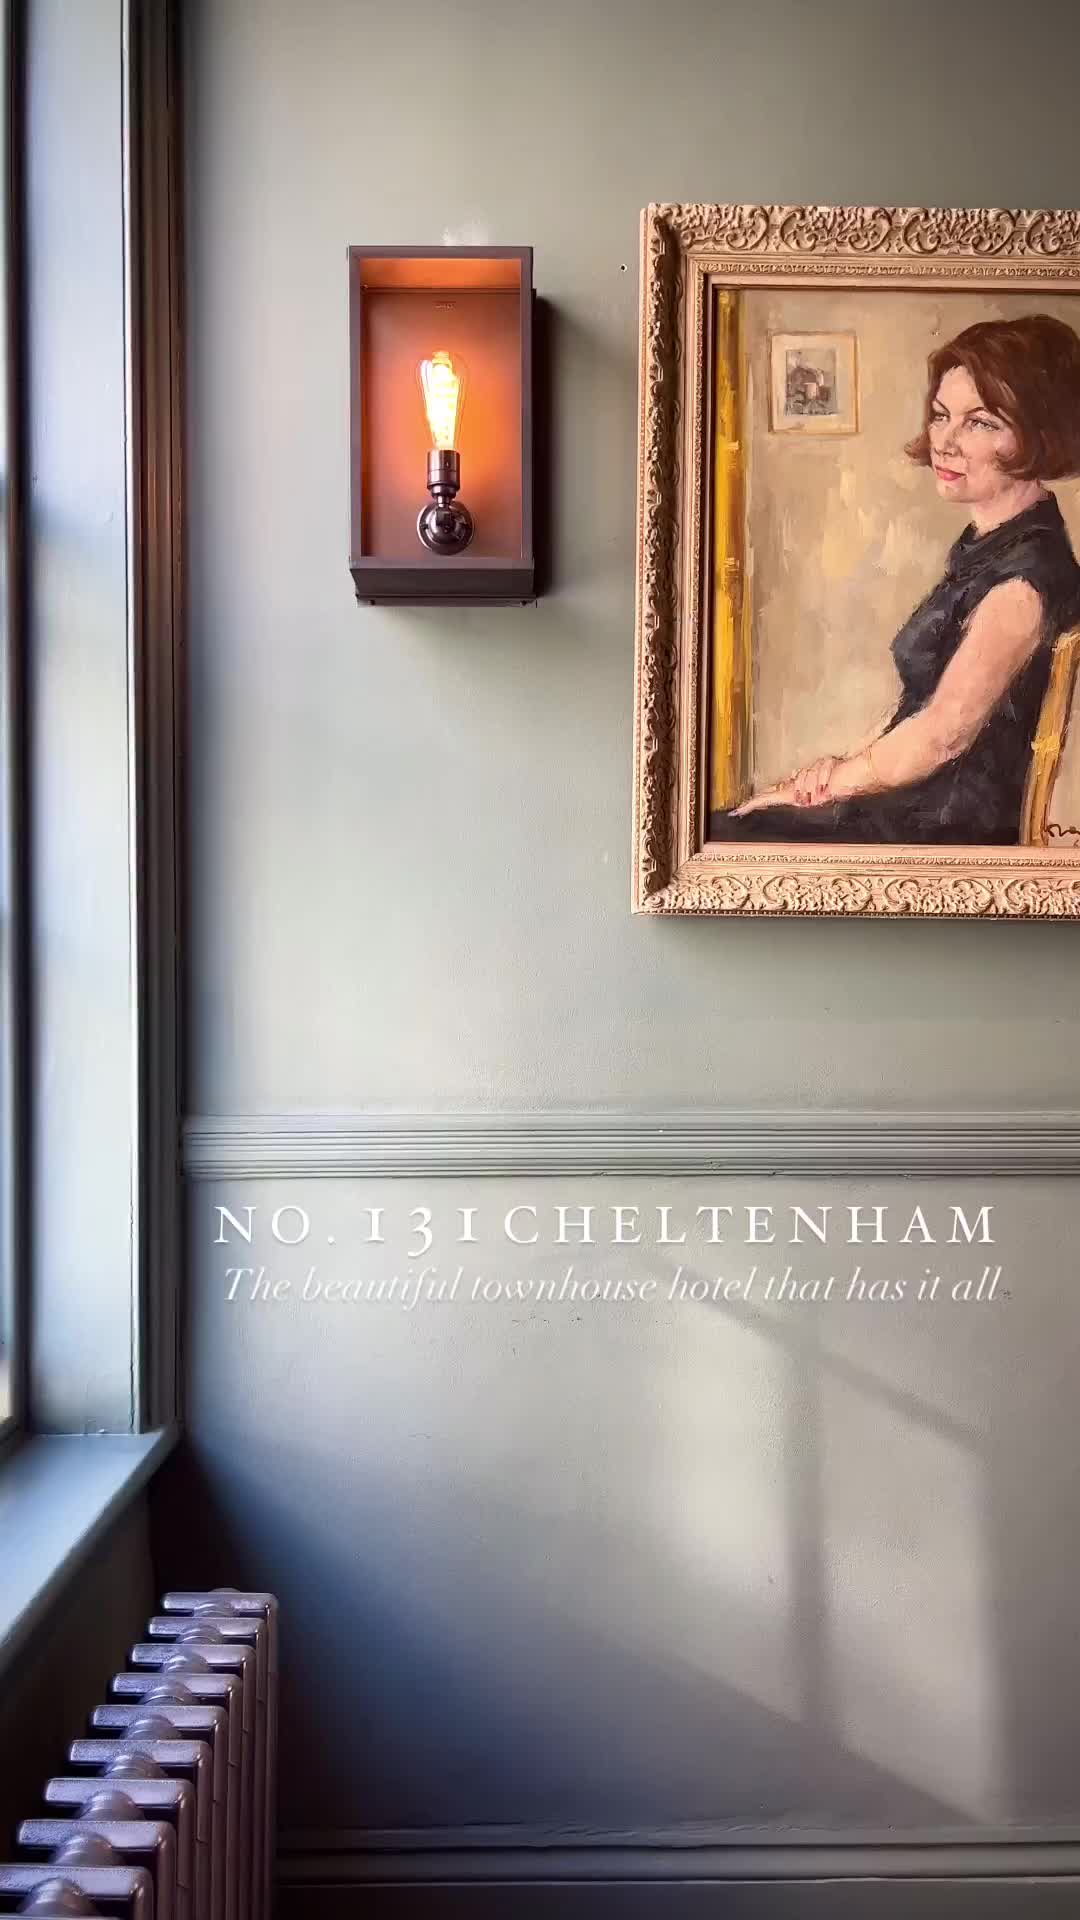 Luxurious Stay at No. 131 Cheltenham Hotel